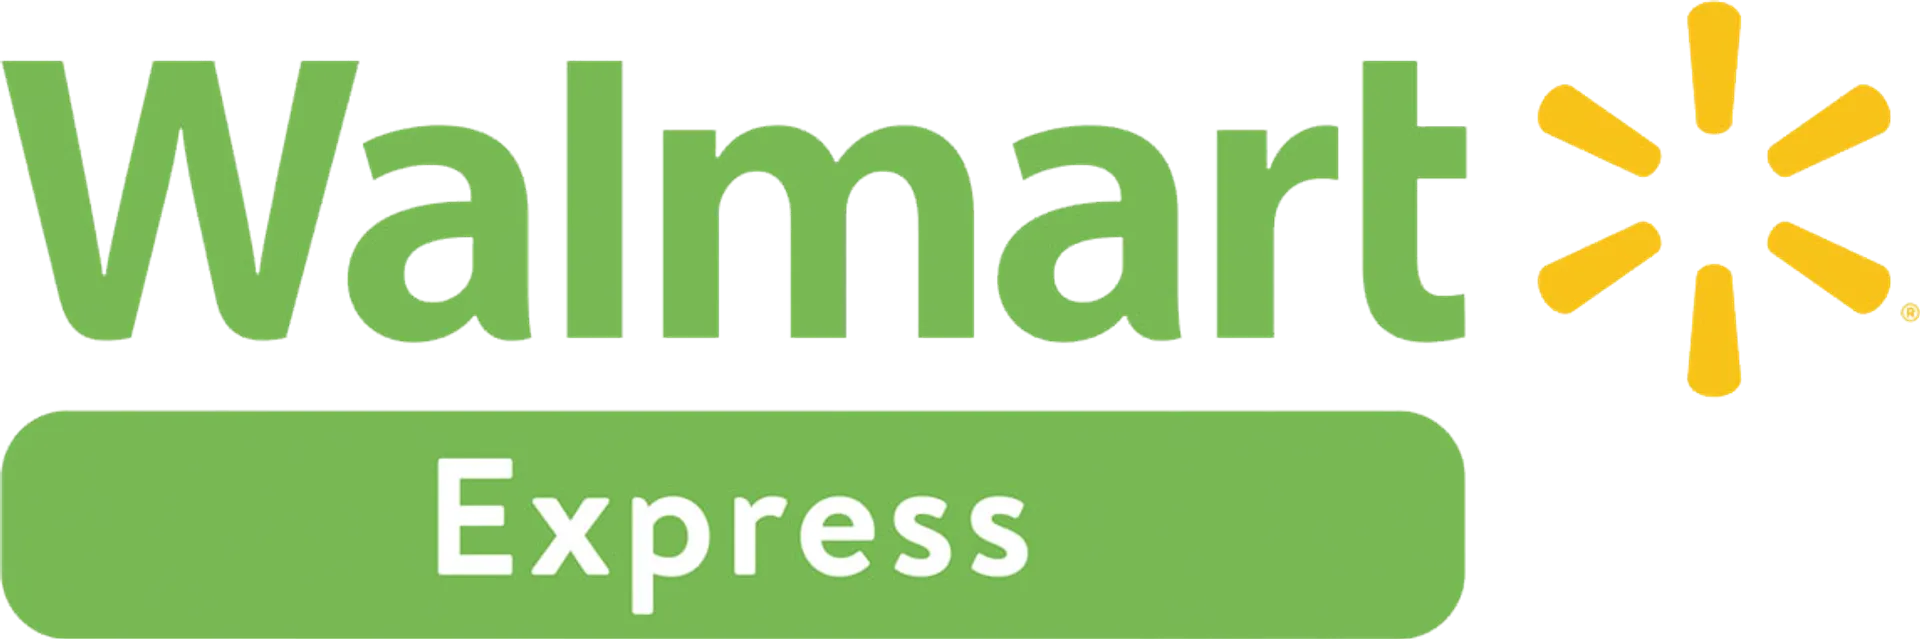 WALMART EXPRESS logo